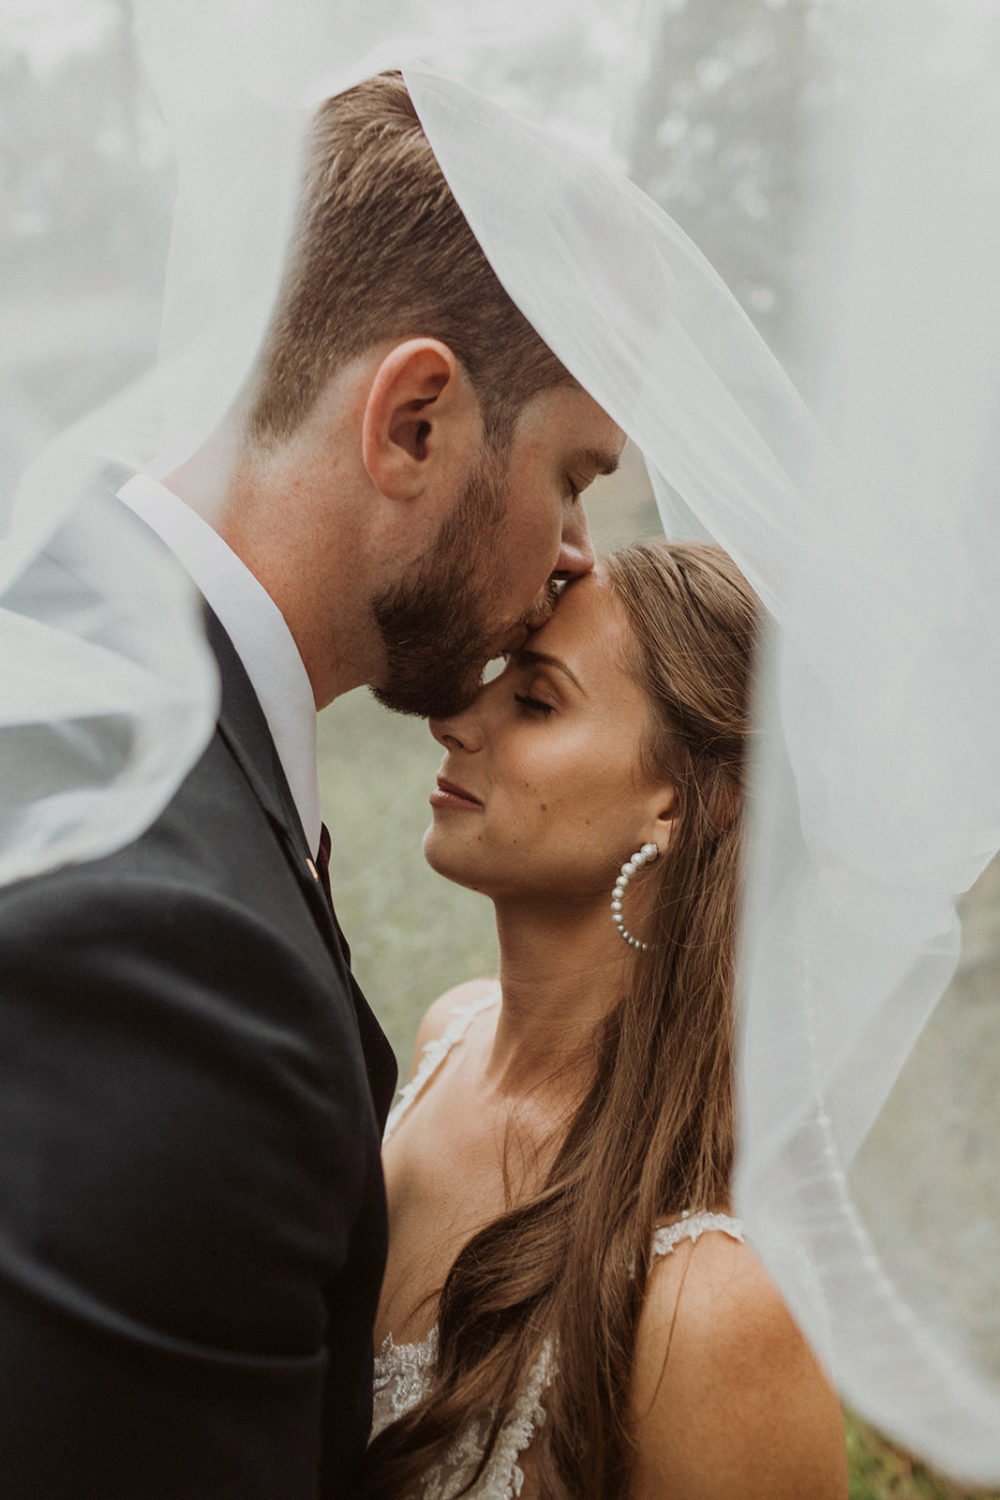 Couple kisses from underneath wedding veil